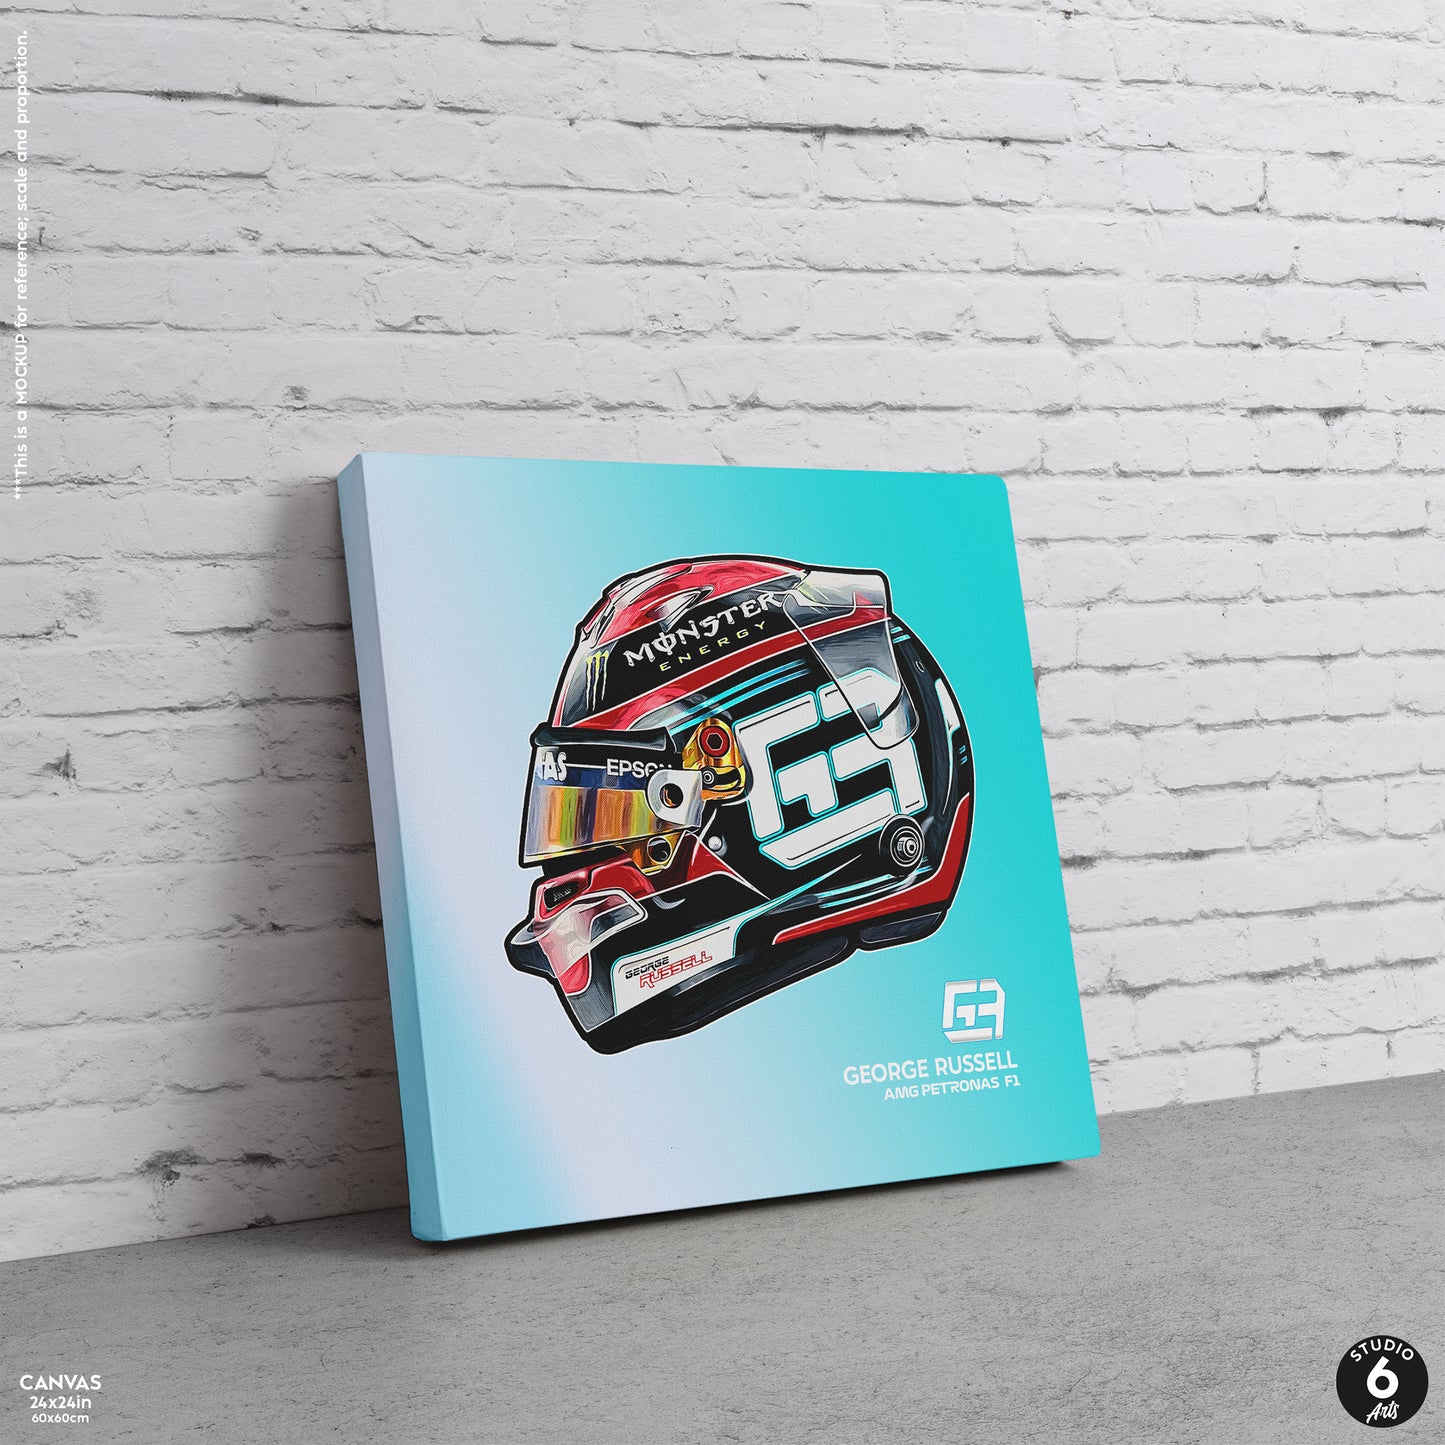 F1 Helmet Collections Canvas Prints